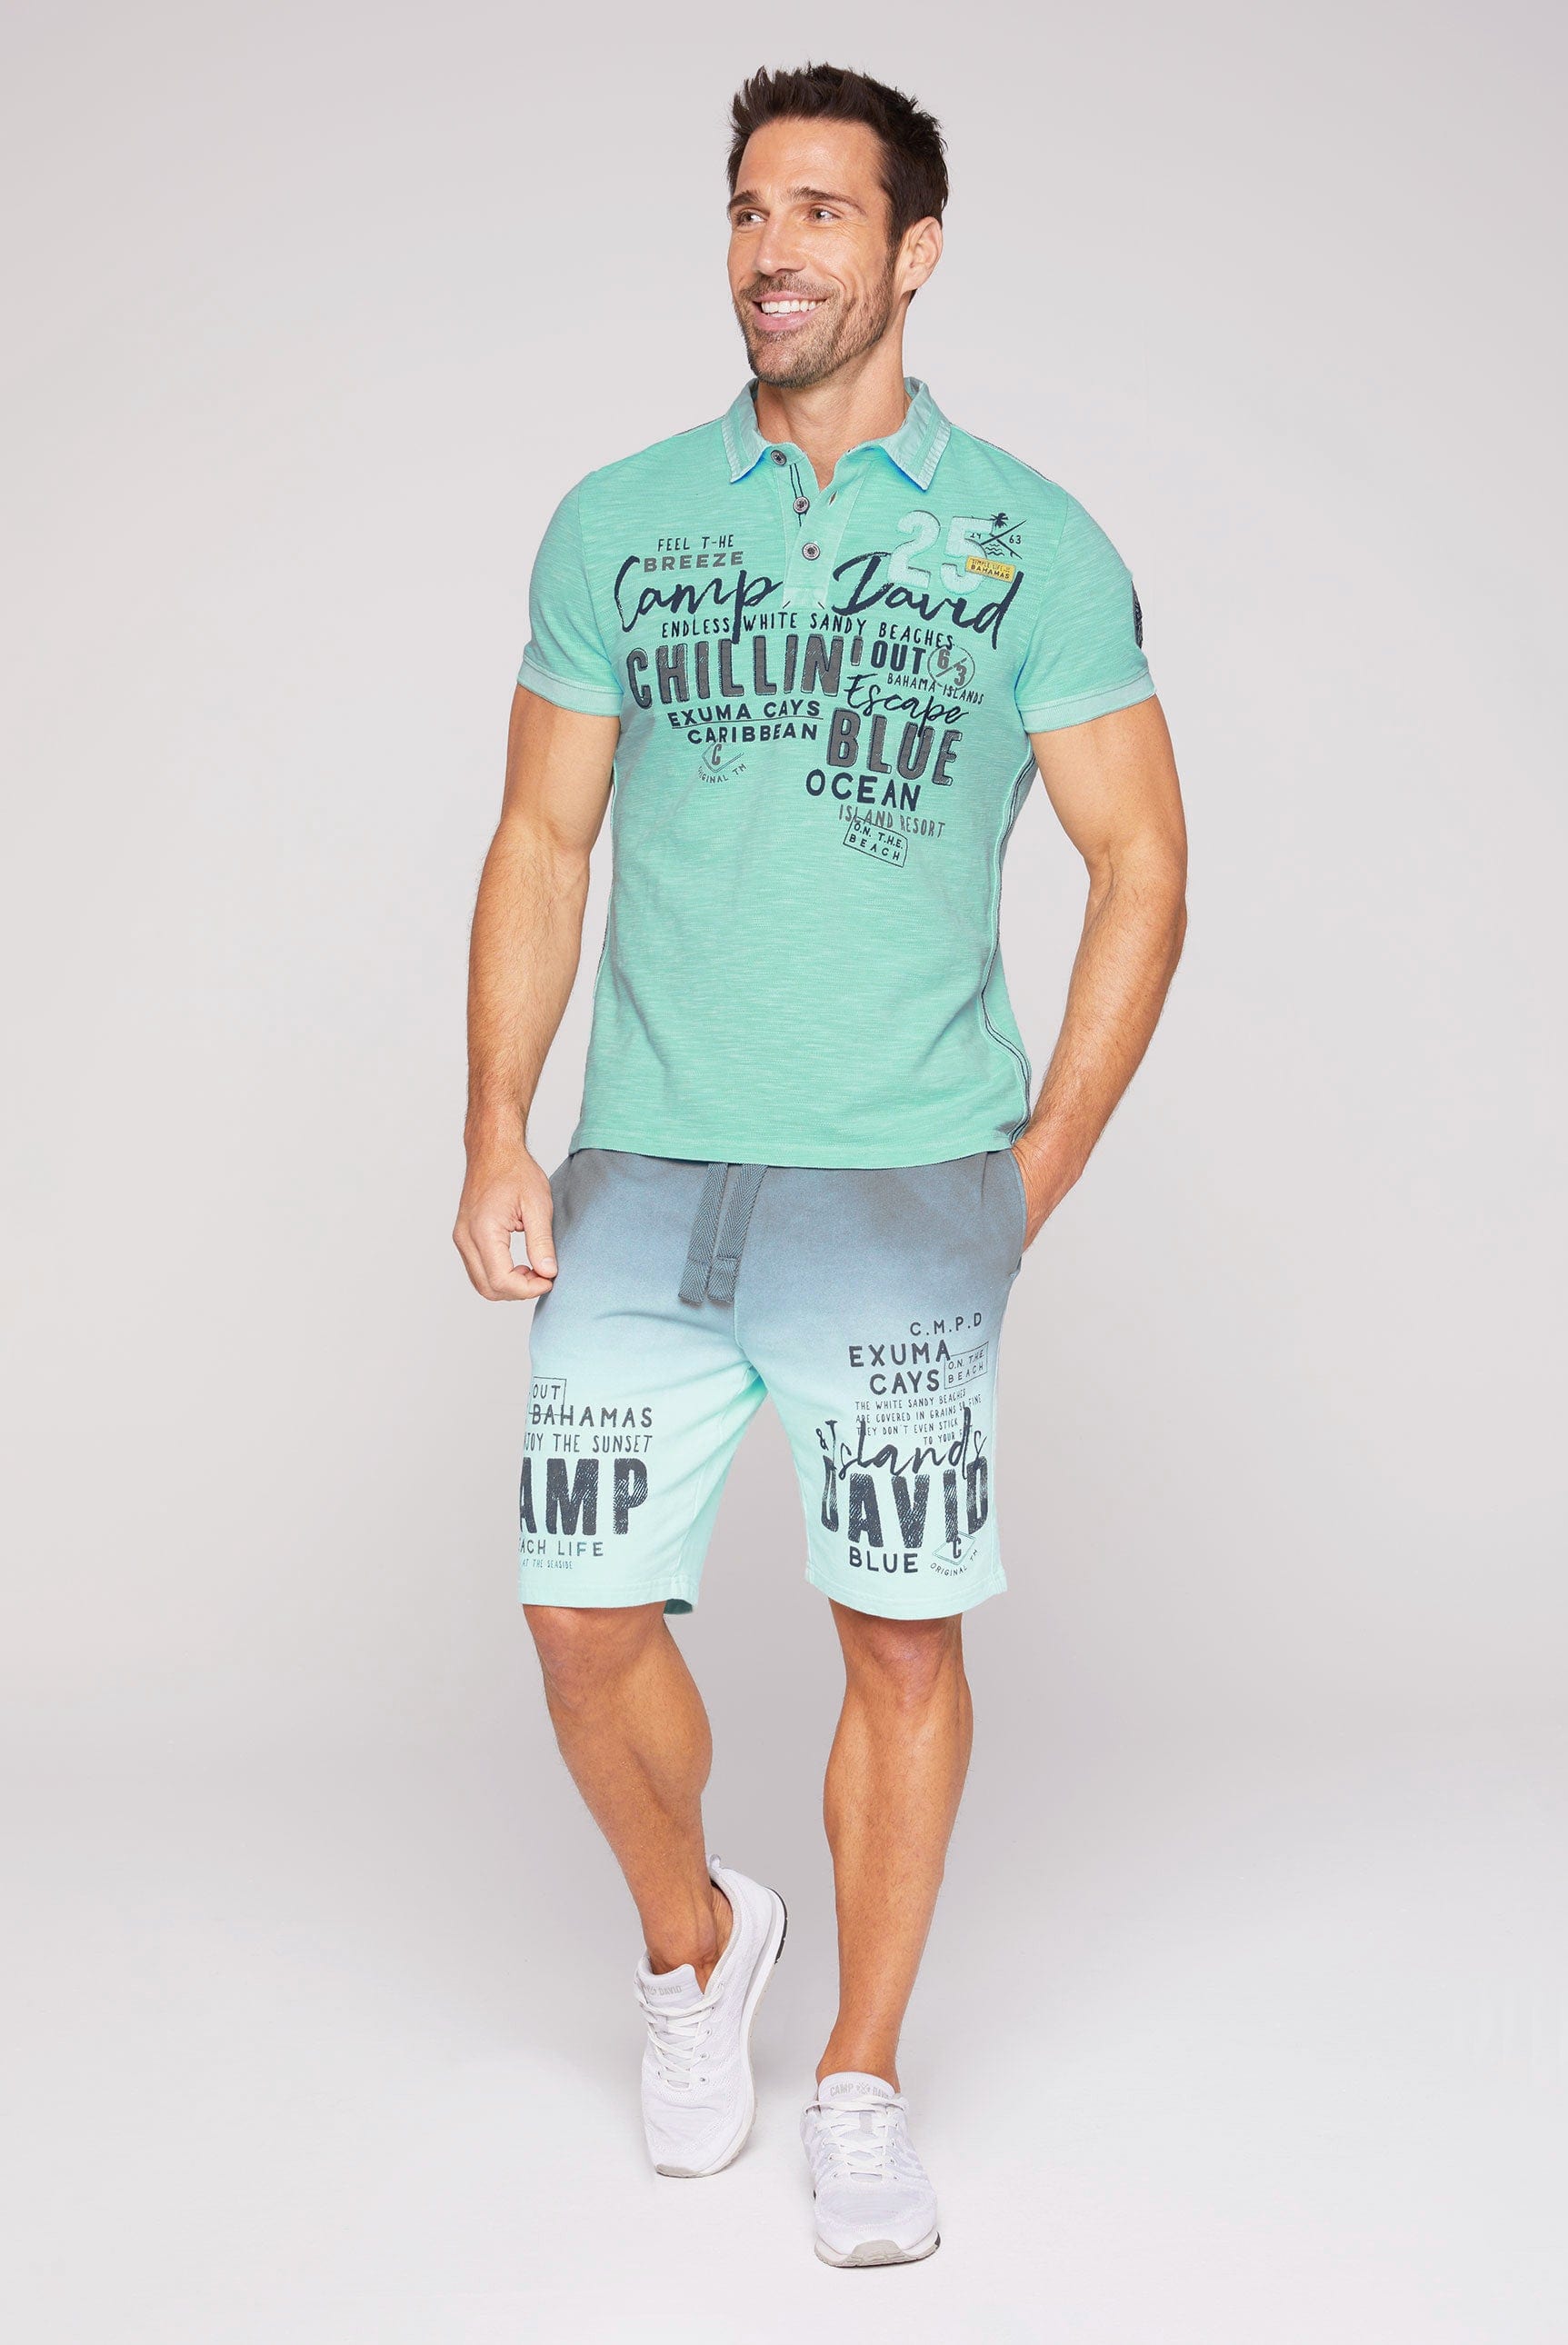 Camp David Poloshirt Beach Life, short sleeves, Cool Mint